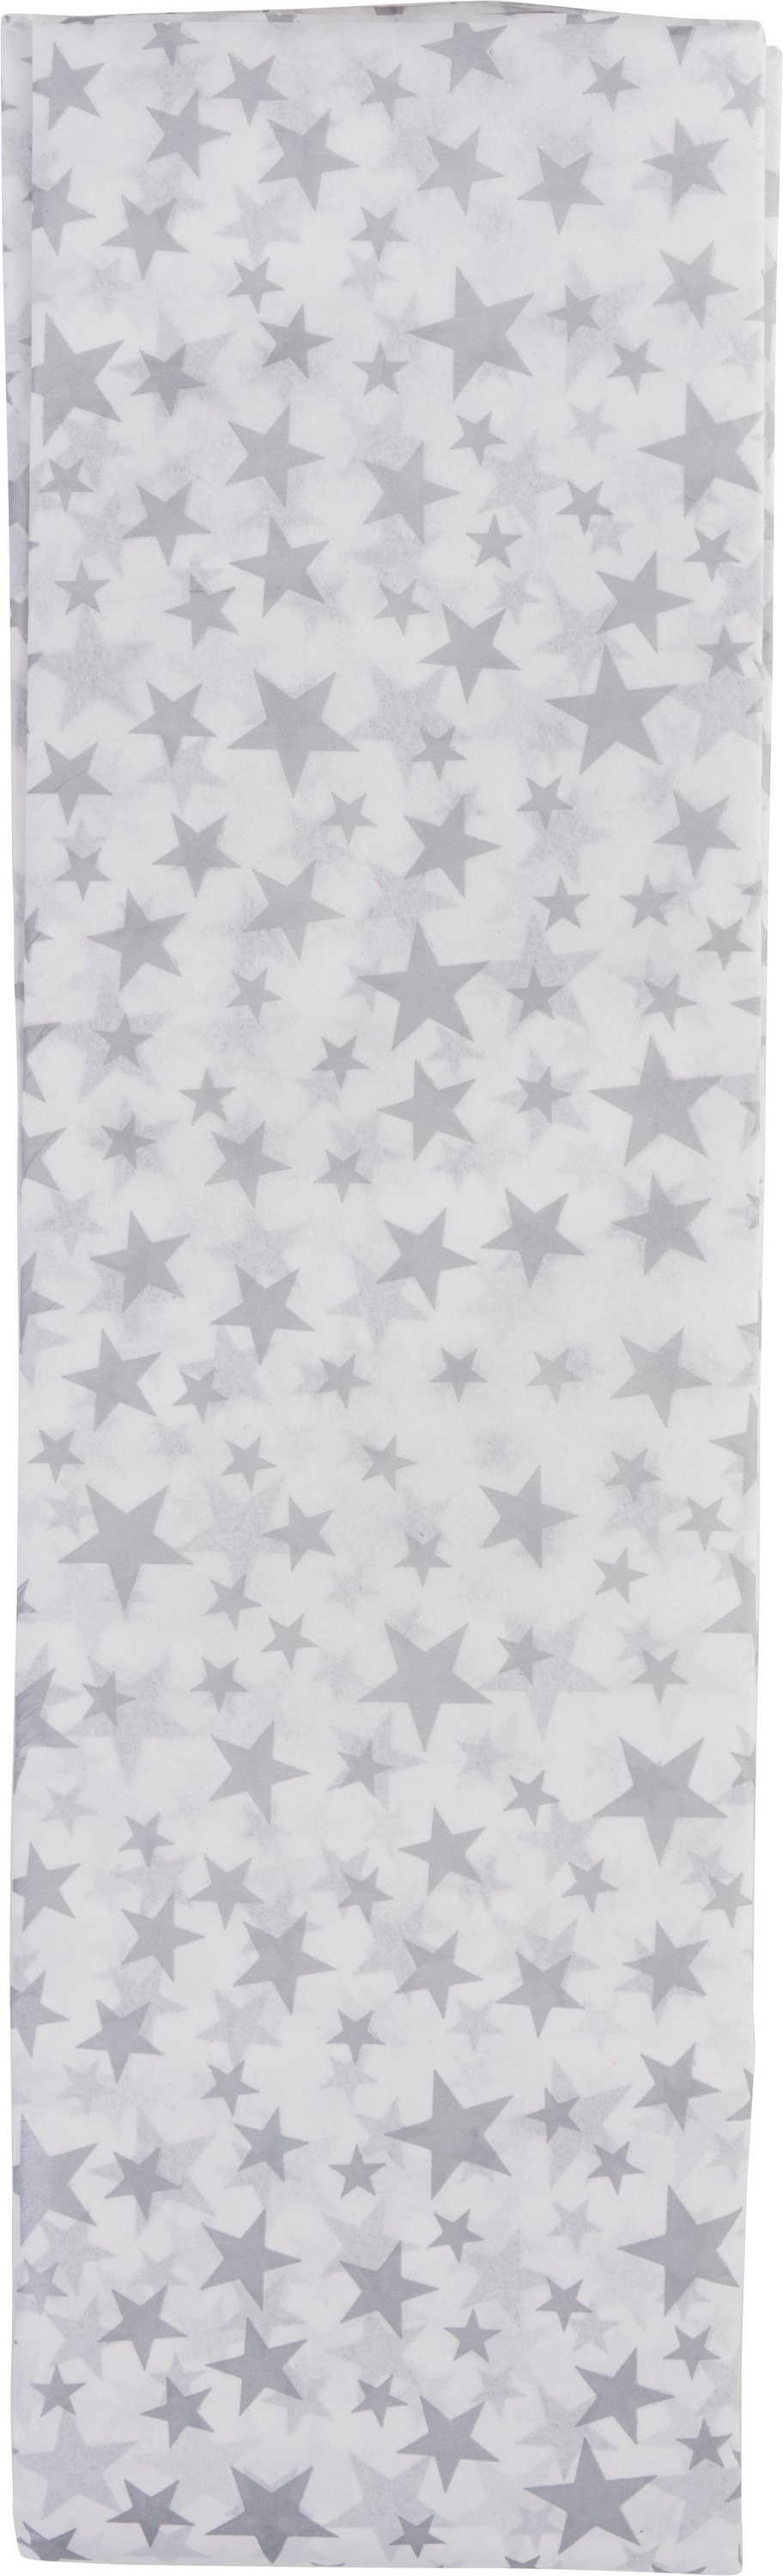 CLAIREFONTAINE Seidenpapier Sterne, 4 Silber Bogen